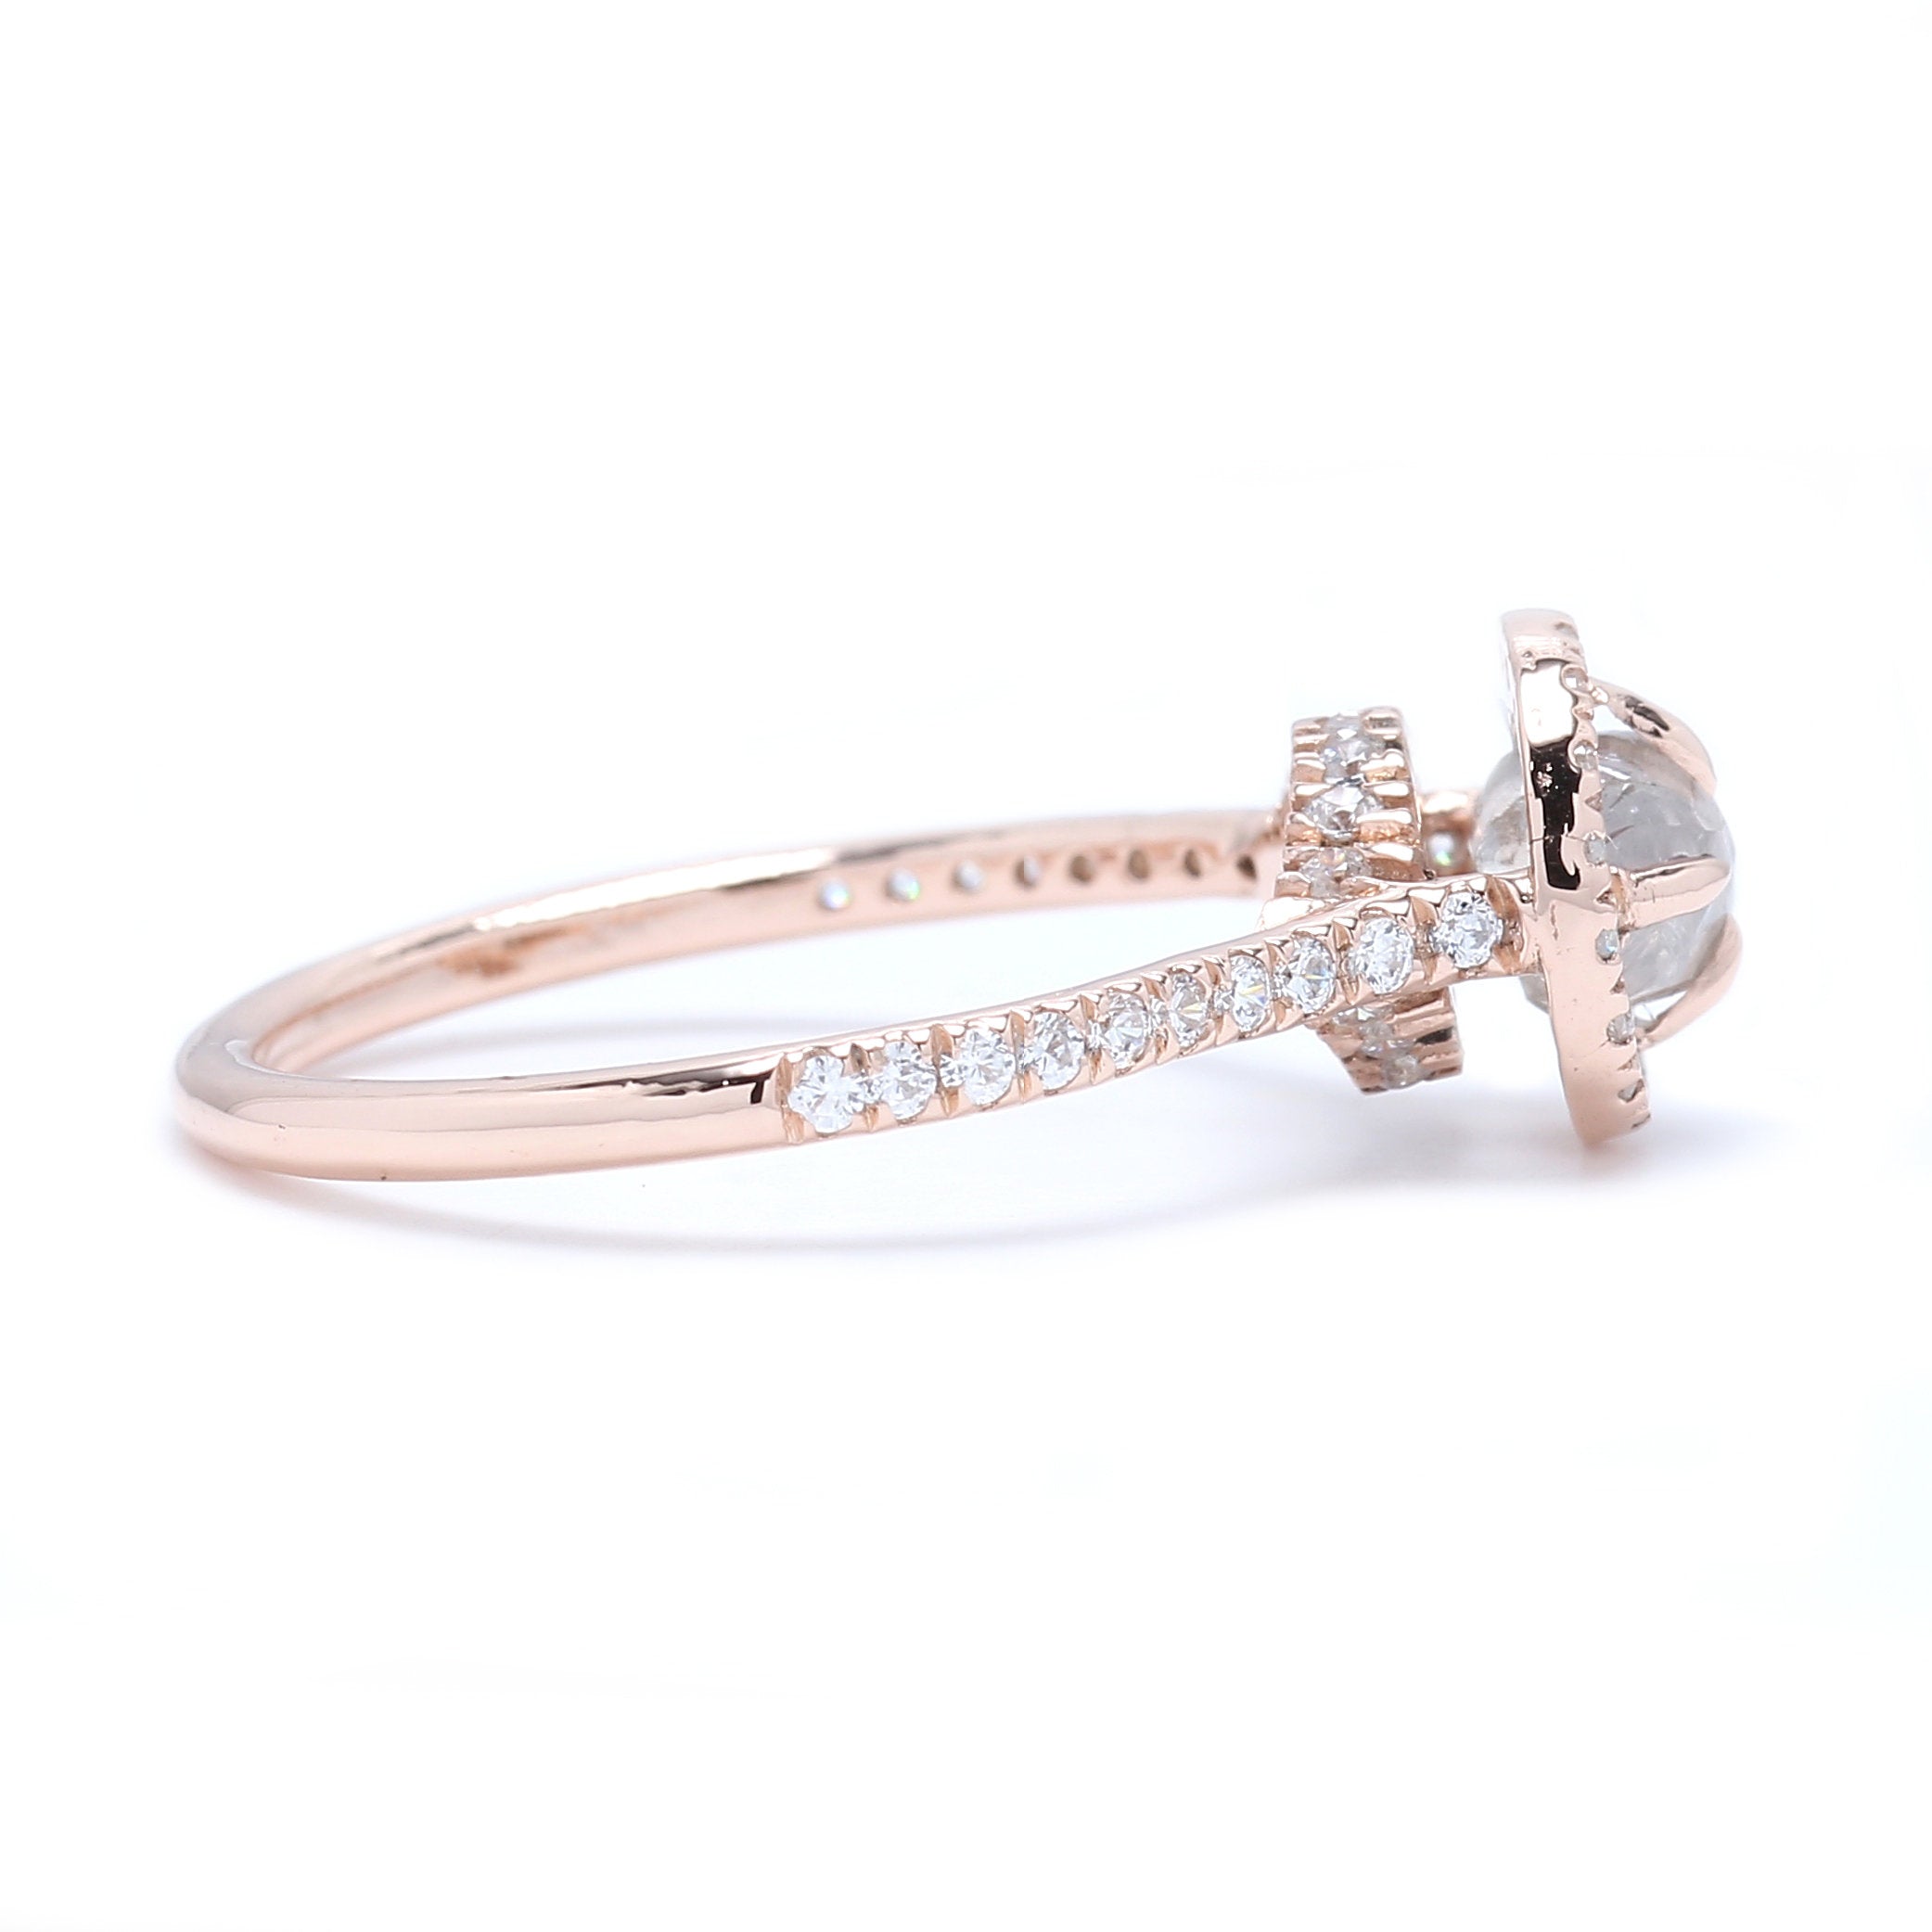 Grey Rough Diamond 14K Solid Rose White Yellow Gold Ring Engagement Wedding Gift Ring KD850